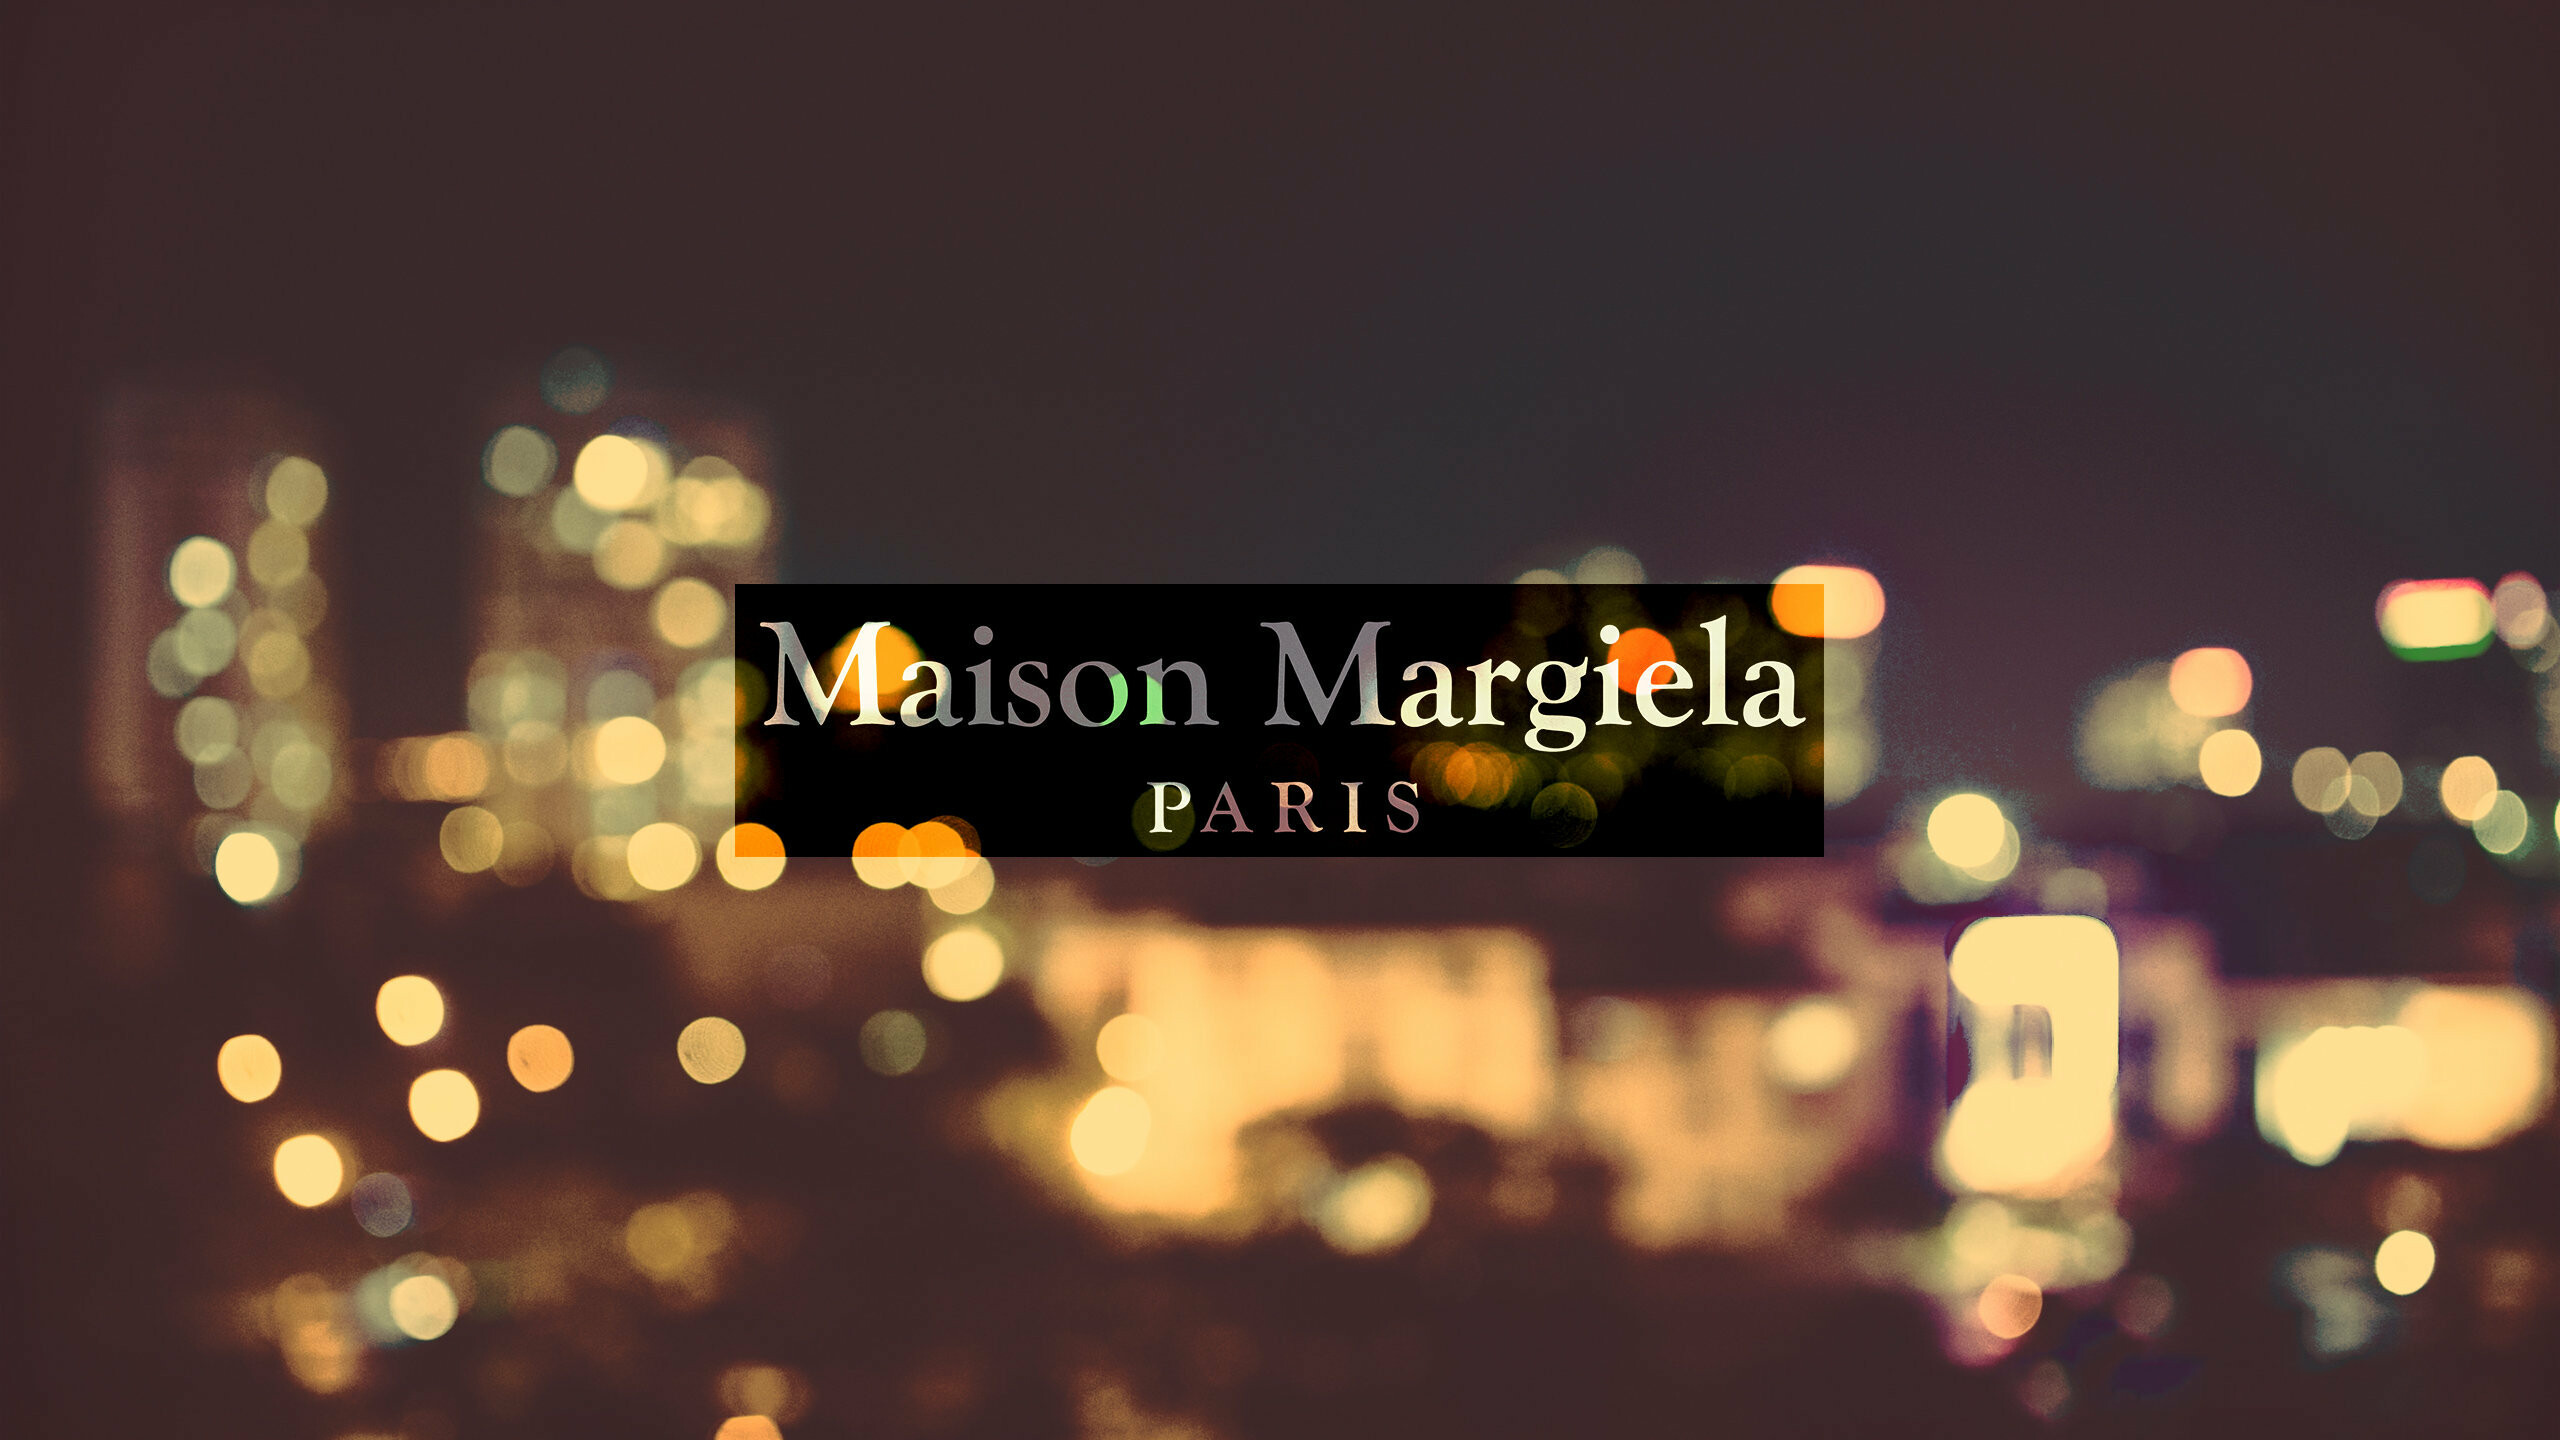 Maison Margiela: The eponymous label launched by Belgian designer. 2560x1440 HD Wallpaper.